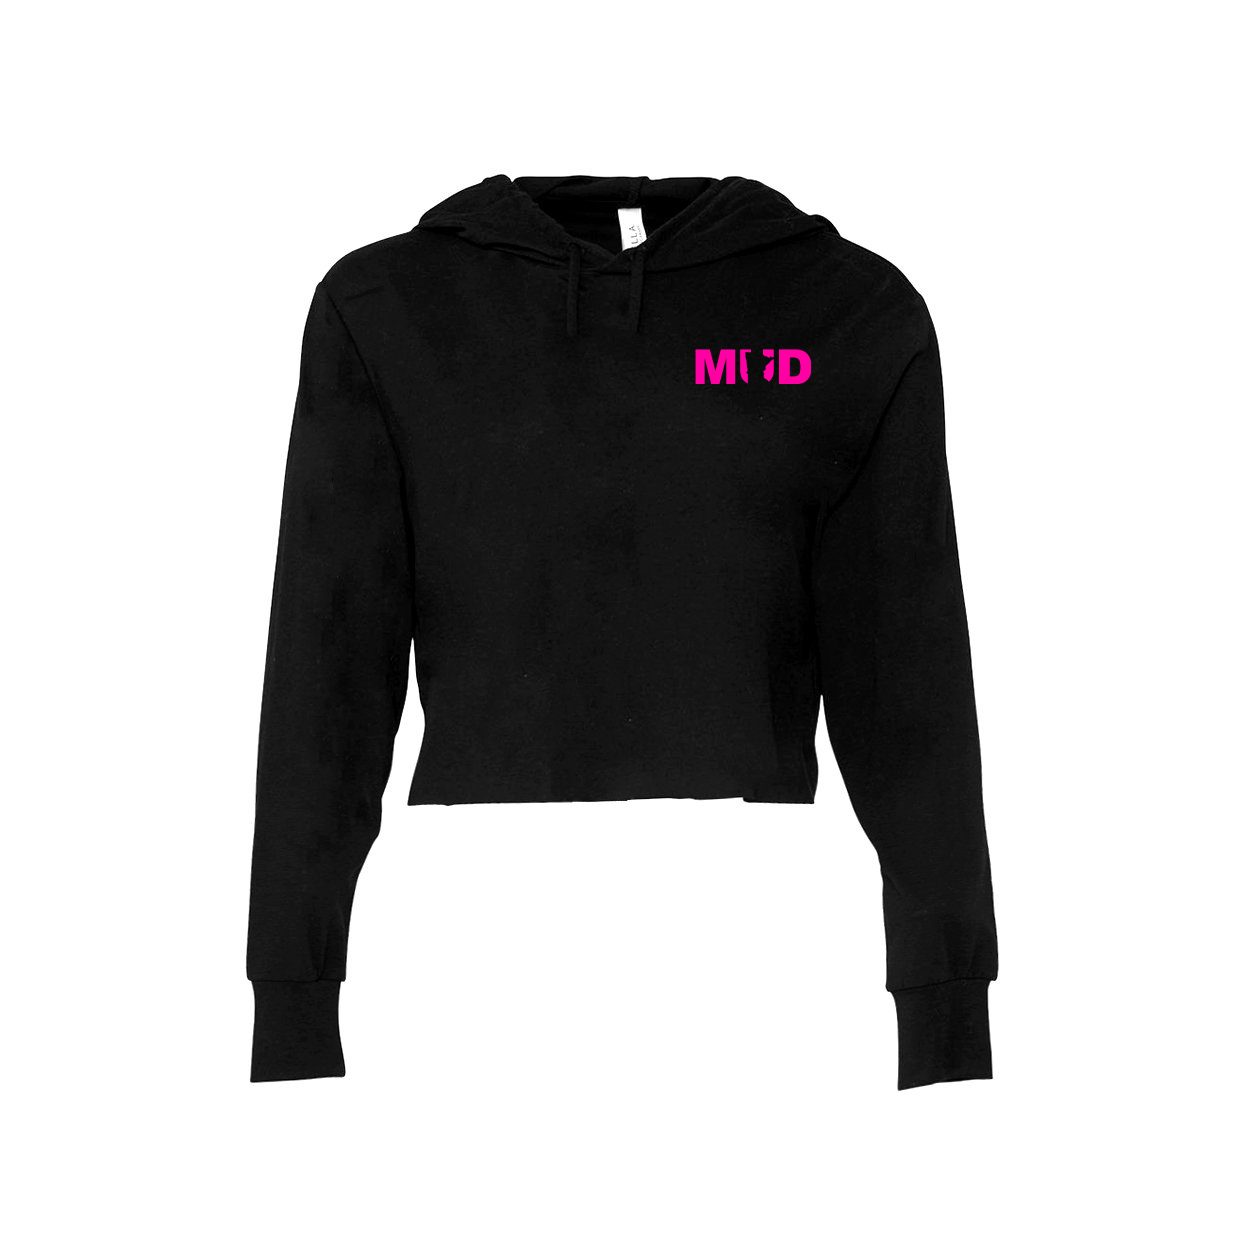 Mud Minnesota Night Out Womens Cropped Sweatshirt Black (Pink Logo)